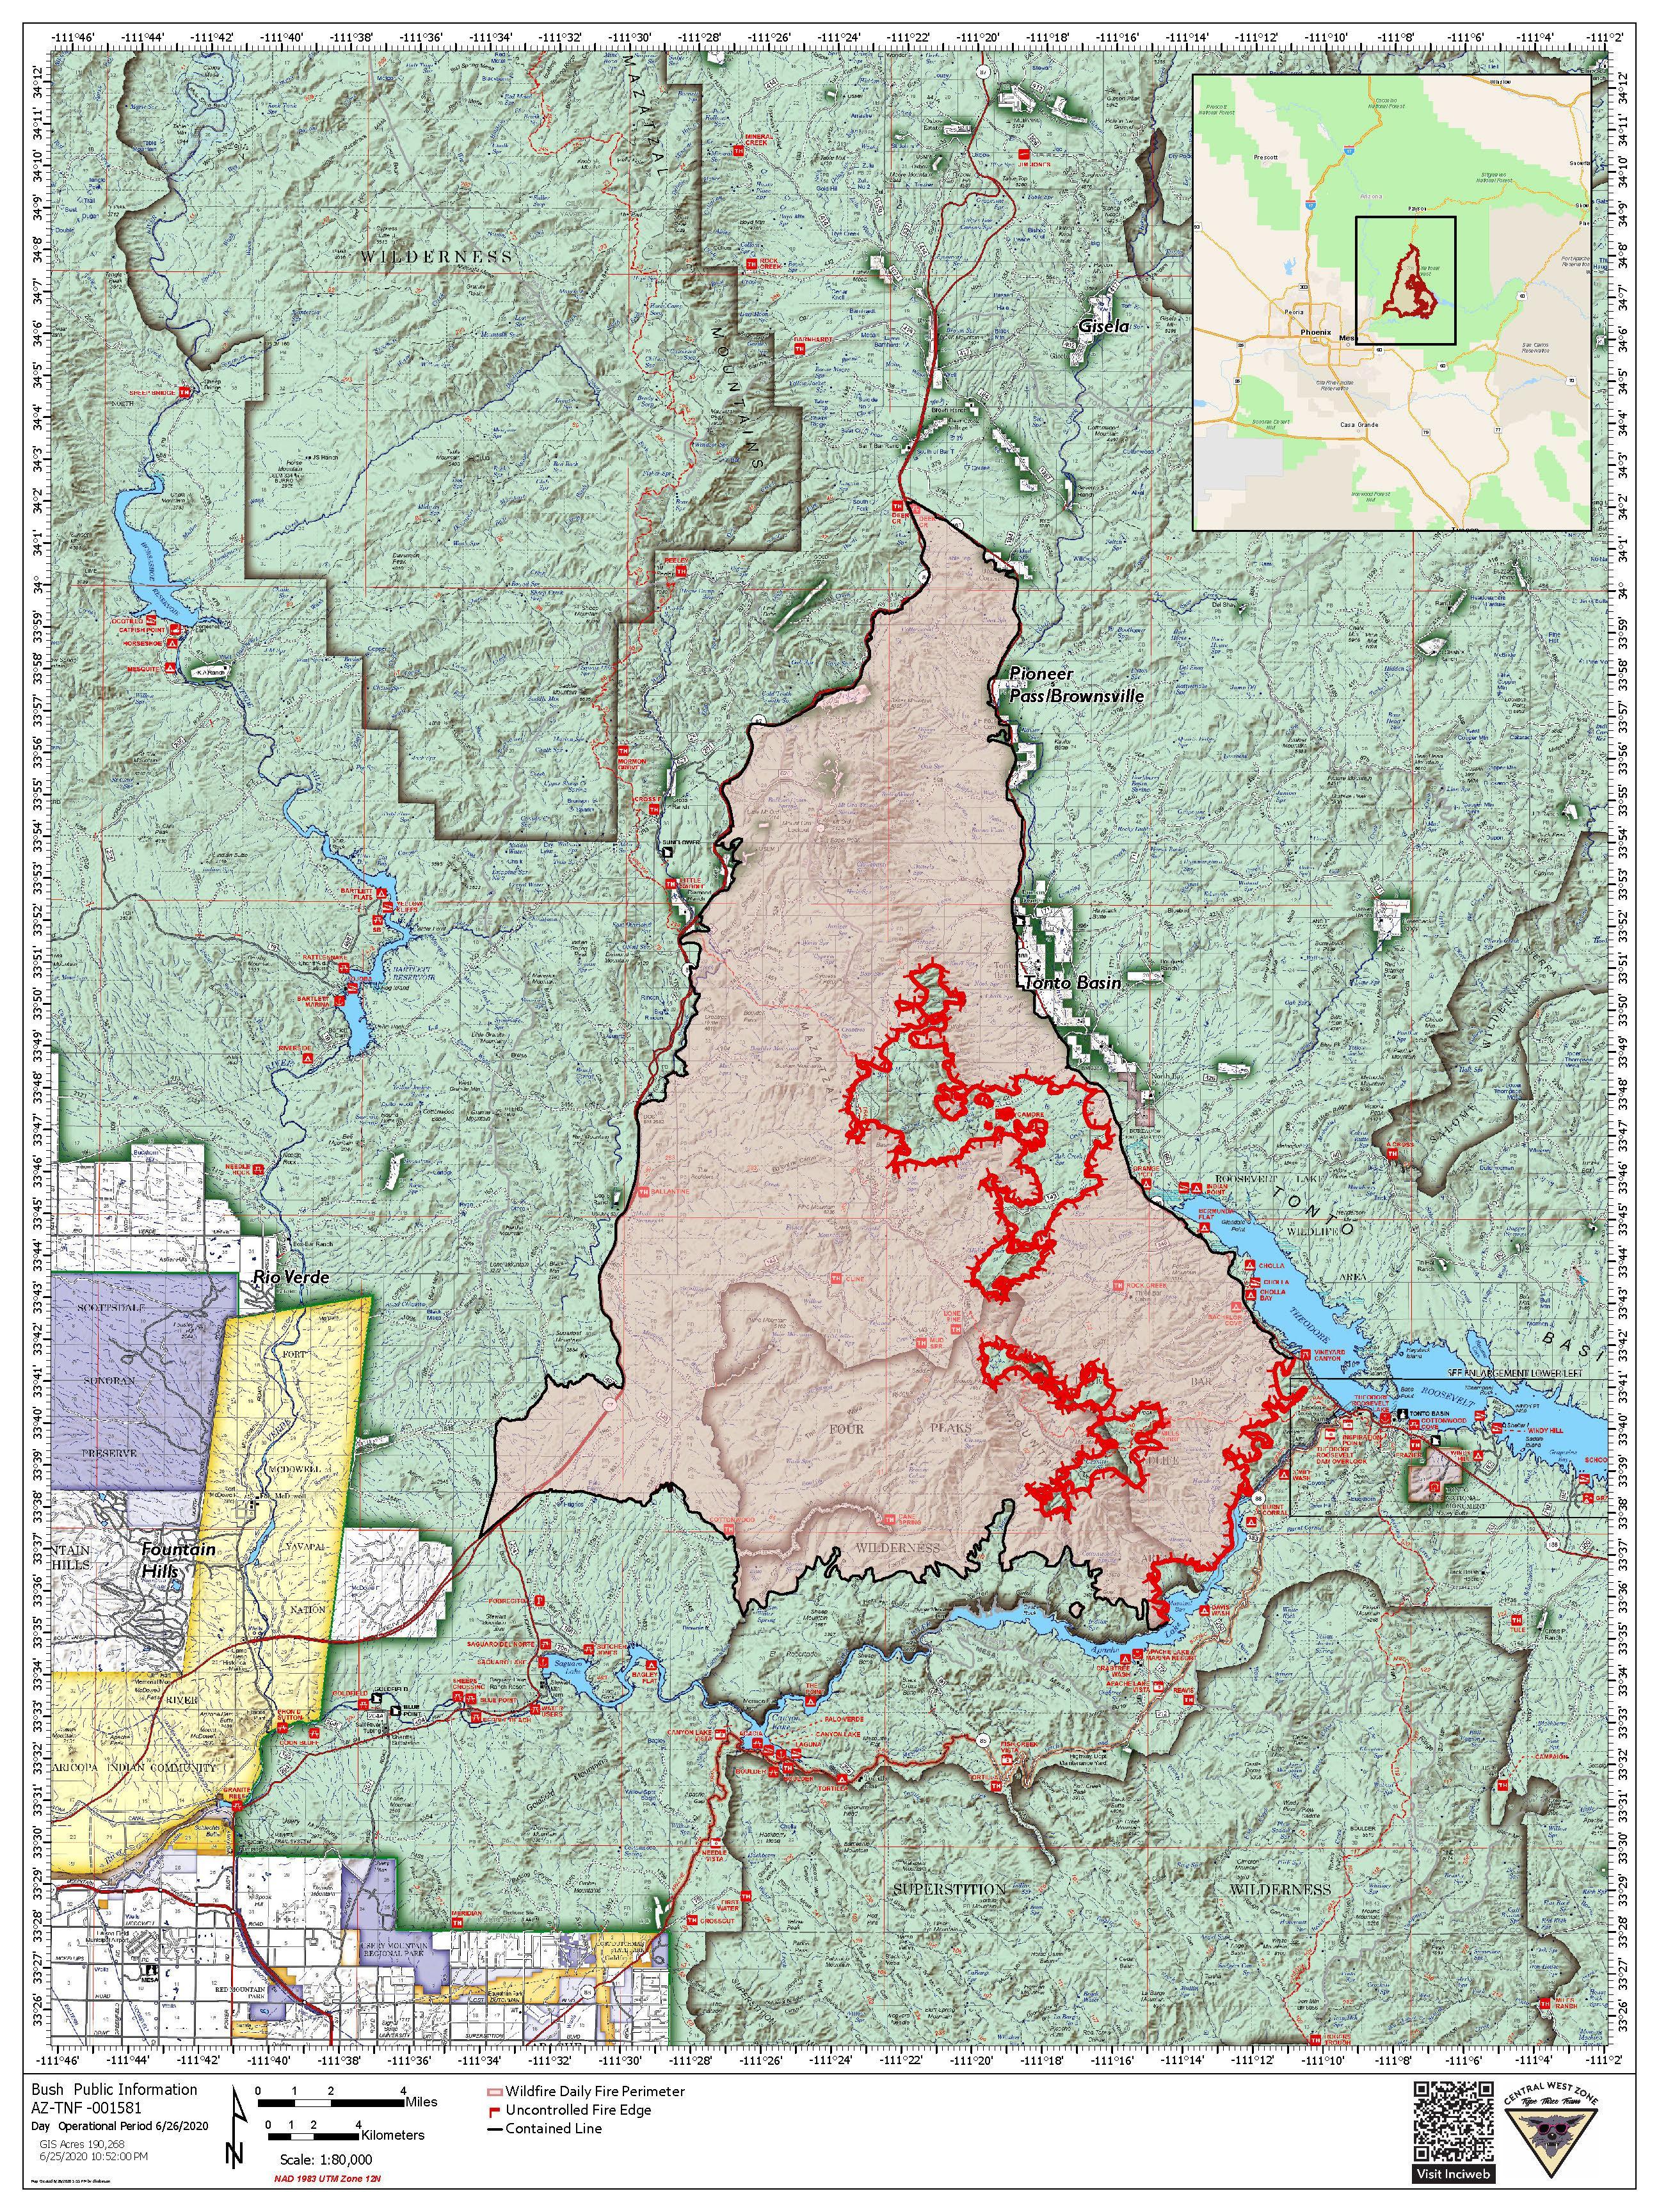 Bush Fire Map 6-27-20